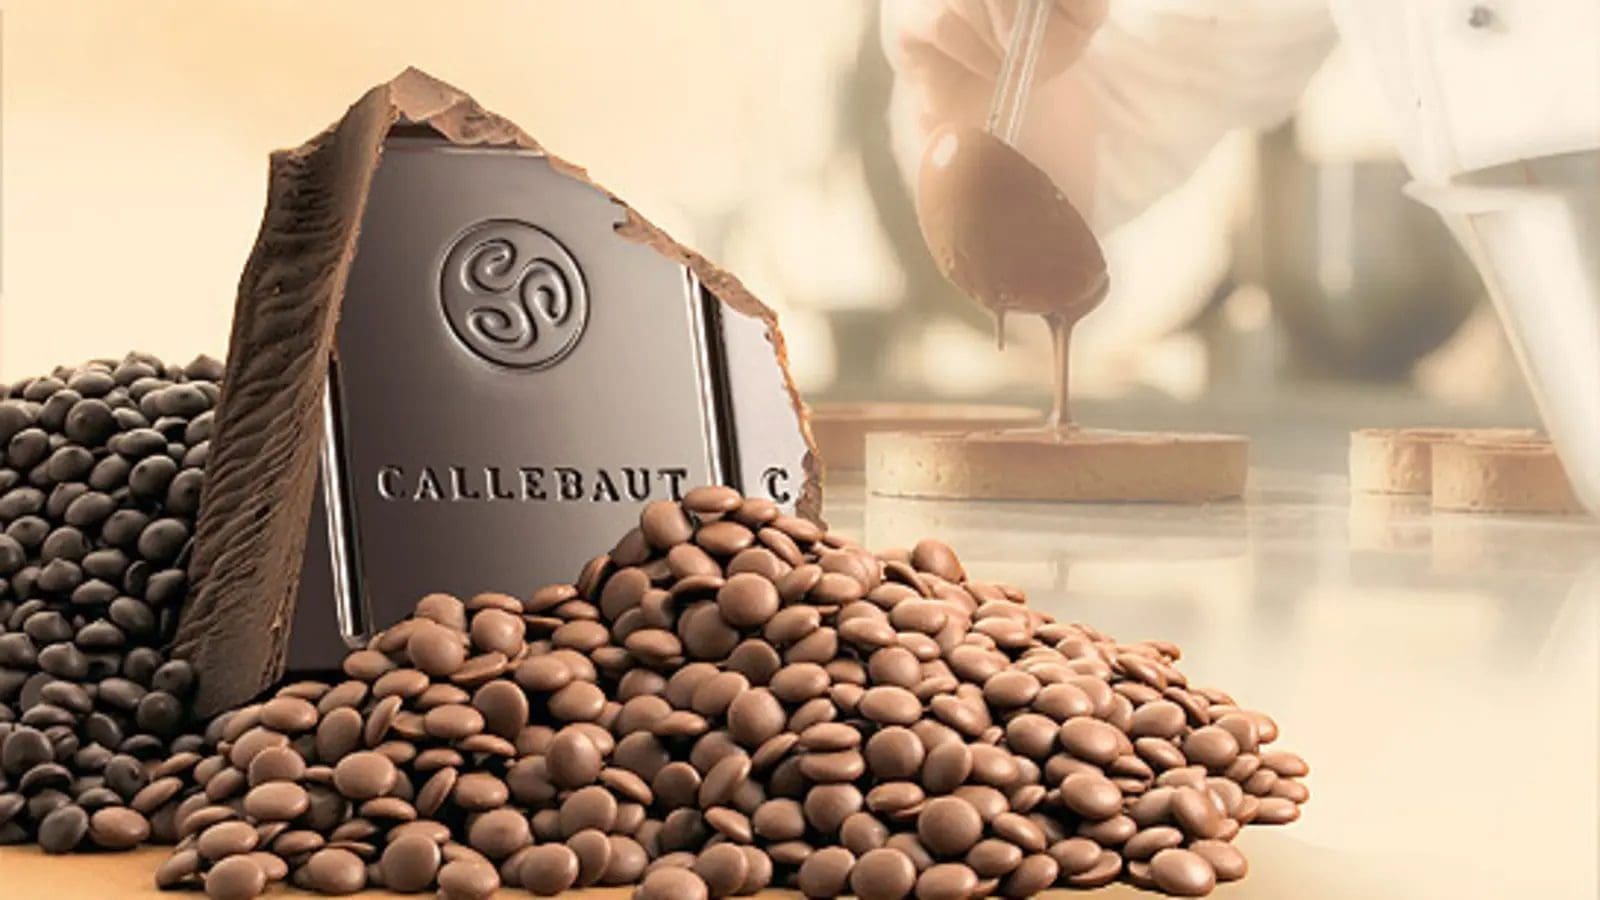 Barry Callebaut confirms Salmonella strain responsible for shut down